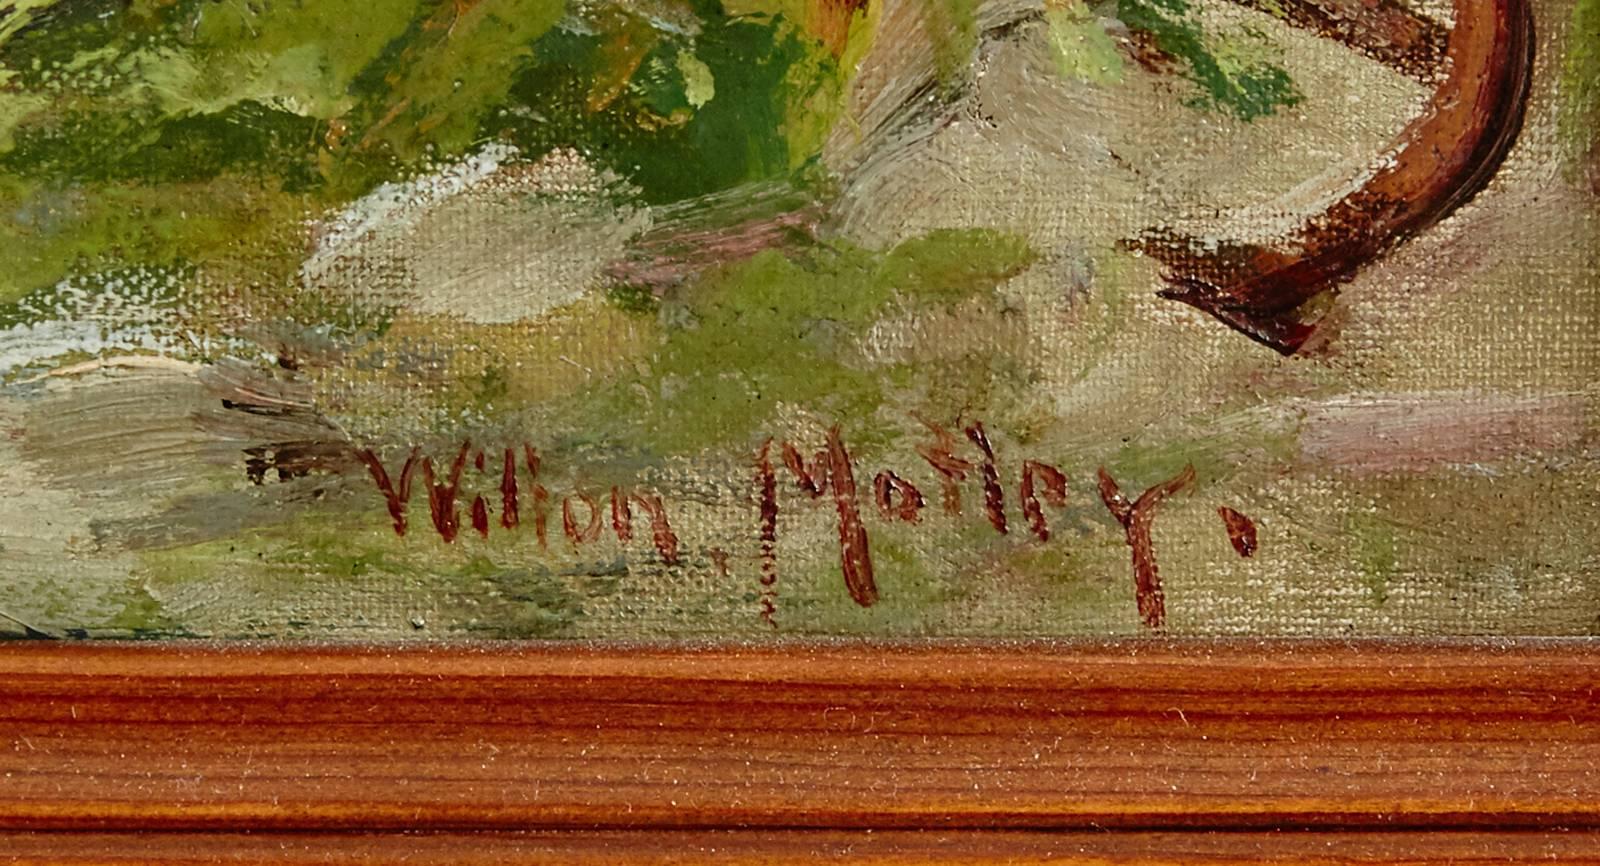 Wilton Motley coastal motif, signed, oil on canvas. Dimensions: 50 x 75 cm.